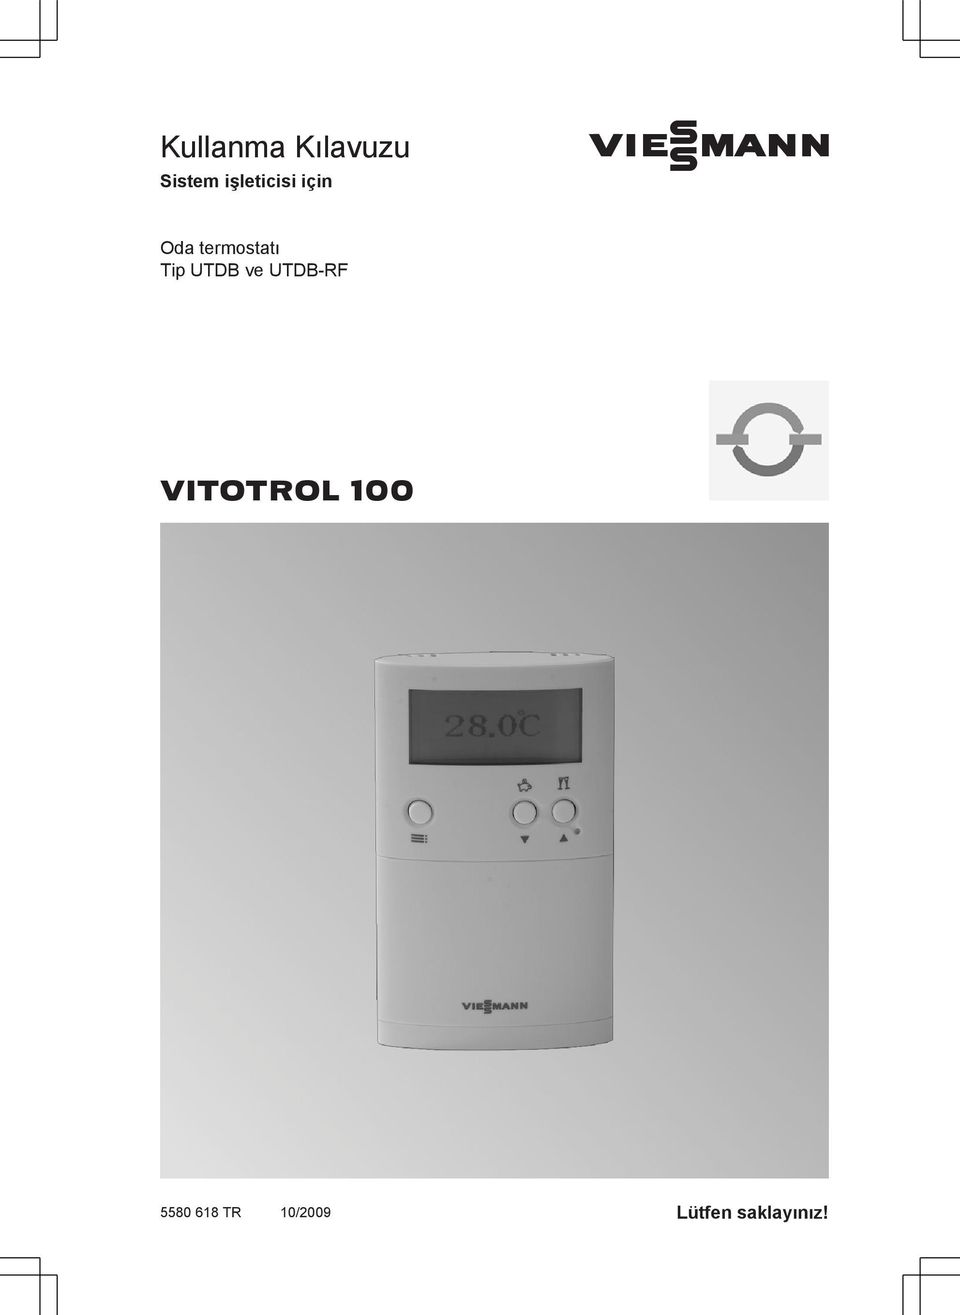 termostatı Tip UTDB ve UTDB-RF